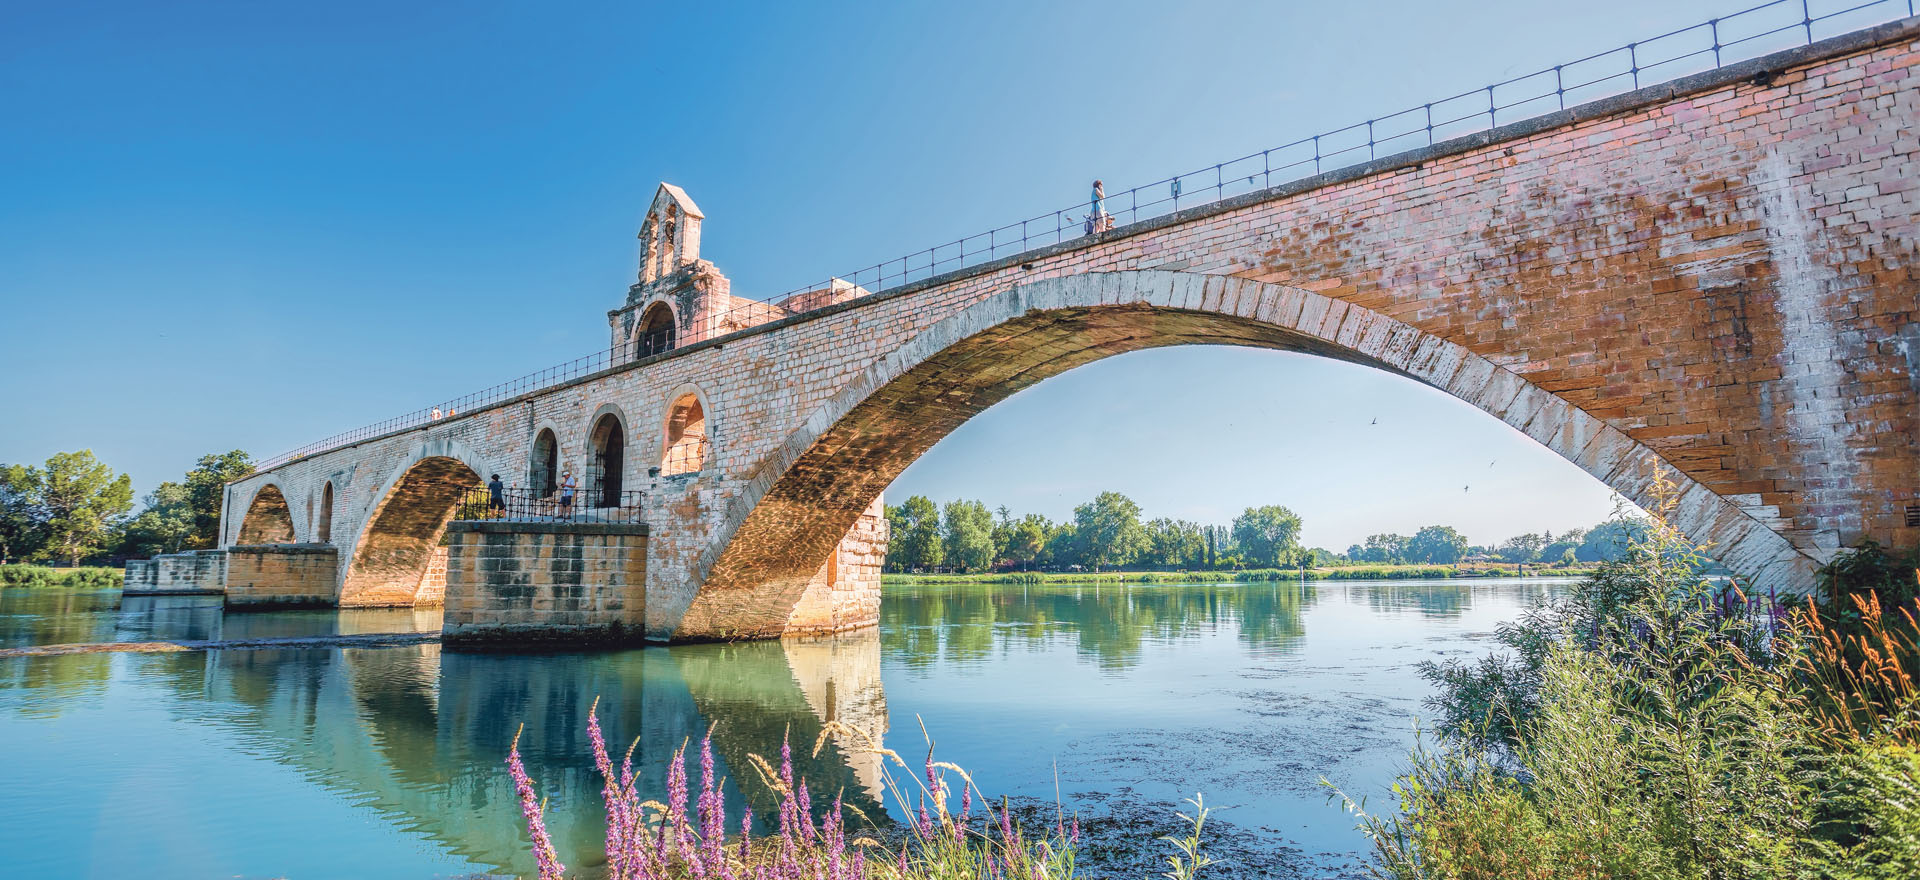 Pont d'Avignon medieval bridge over the river Rhone | Avignon, France 